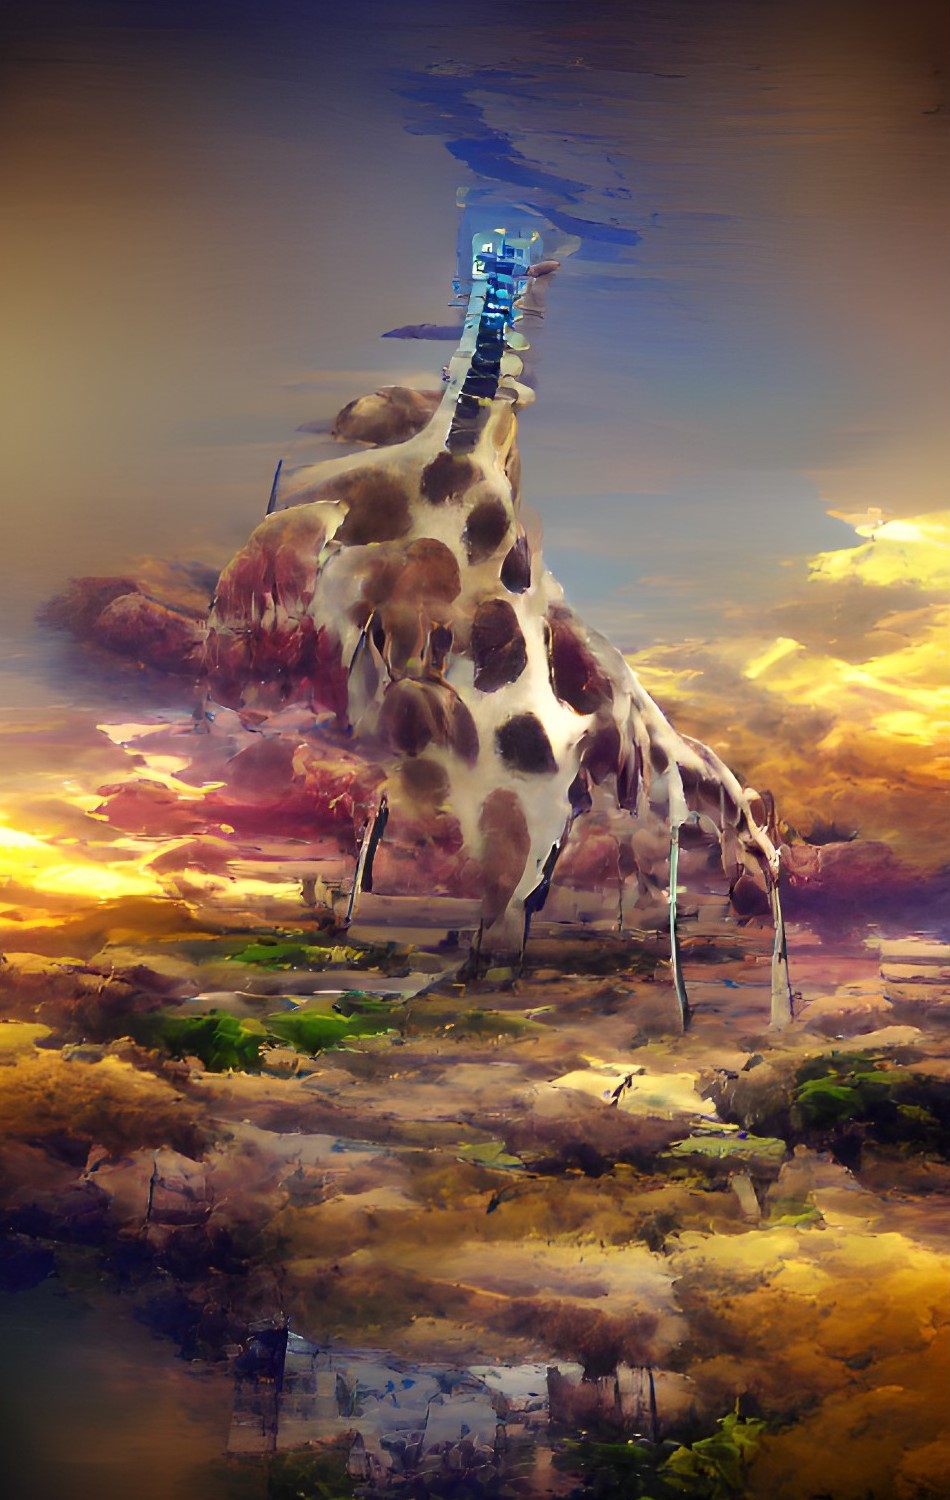 Play With Giraffe.jpg